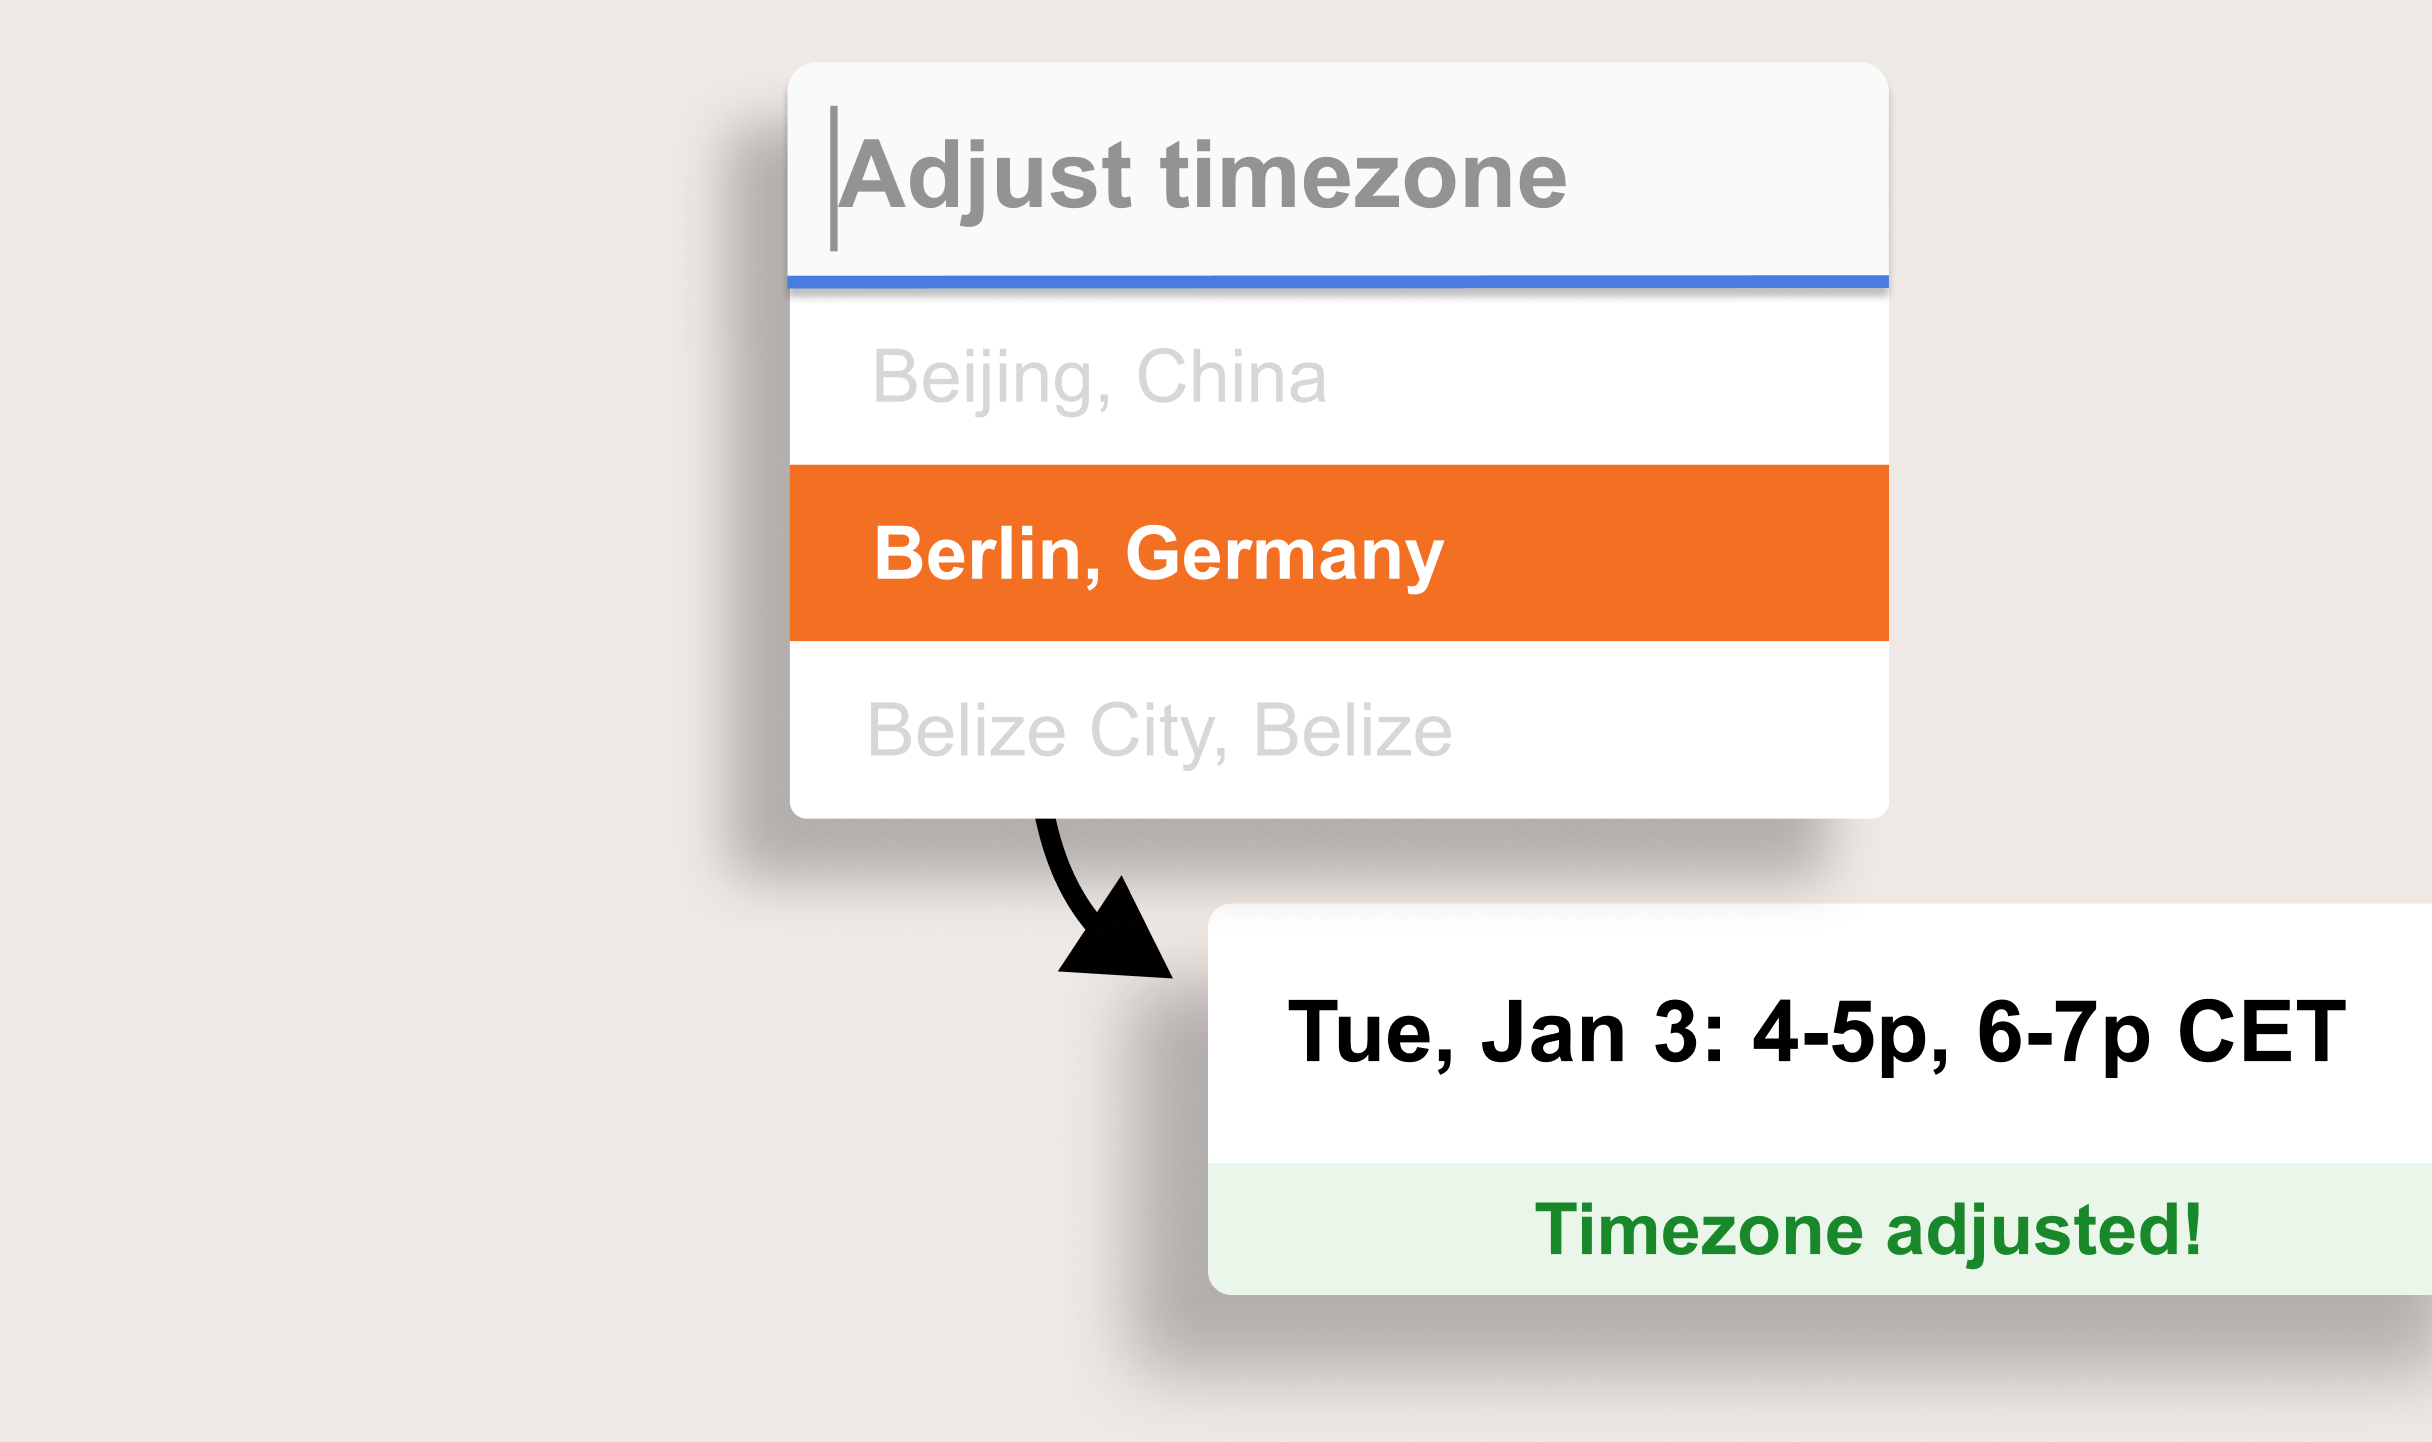 Sundial's timezone adjustment feature